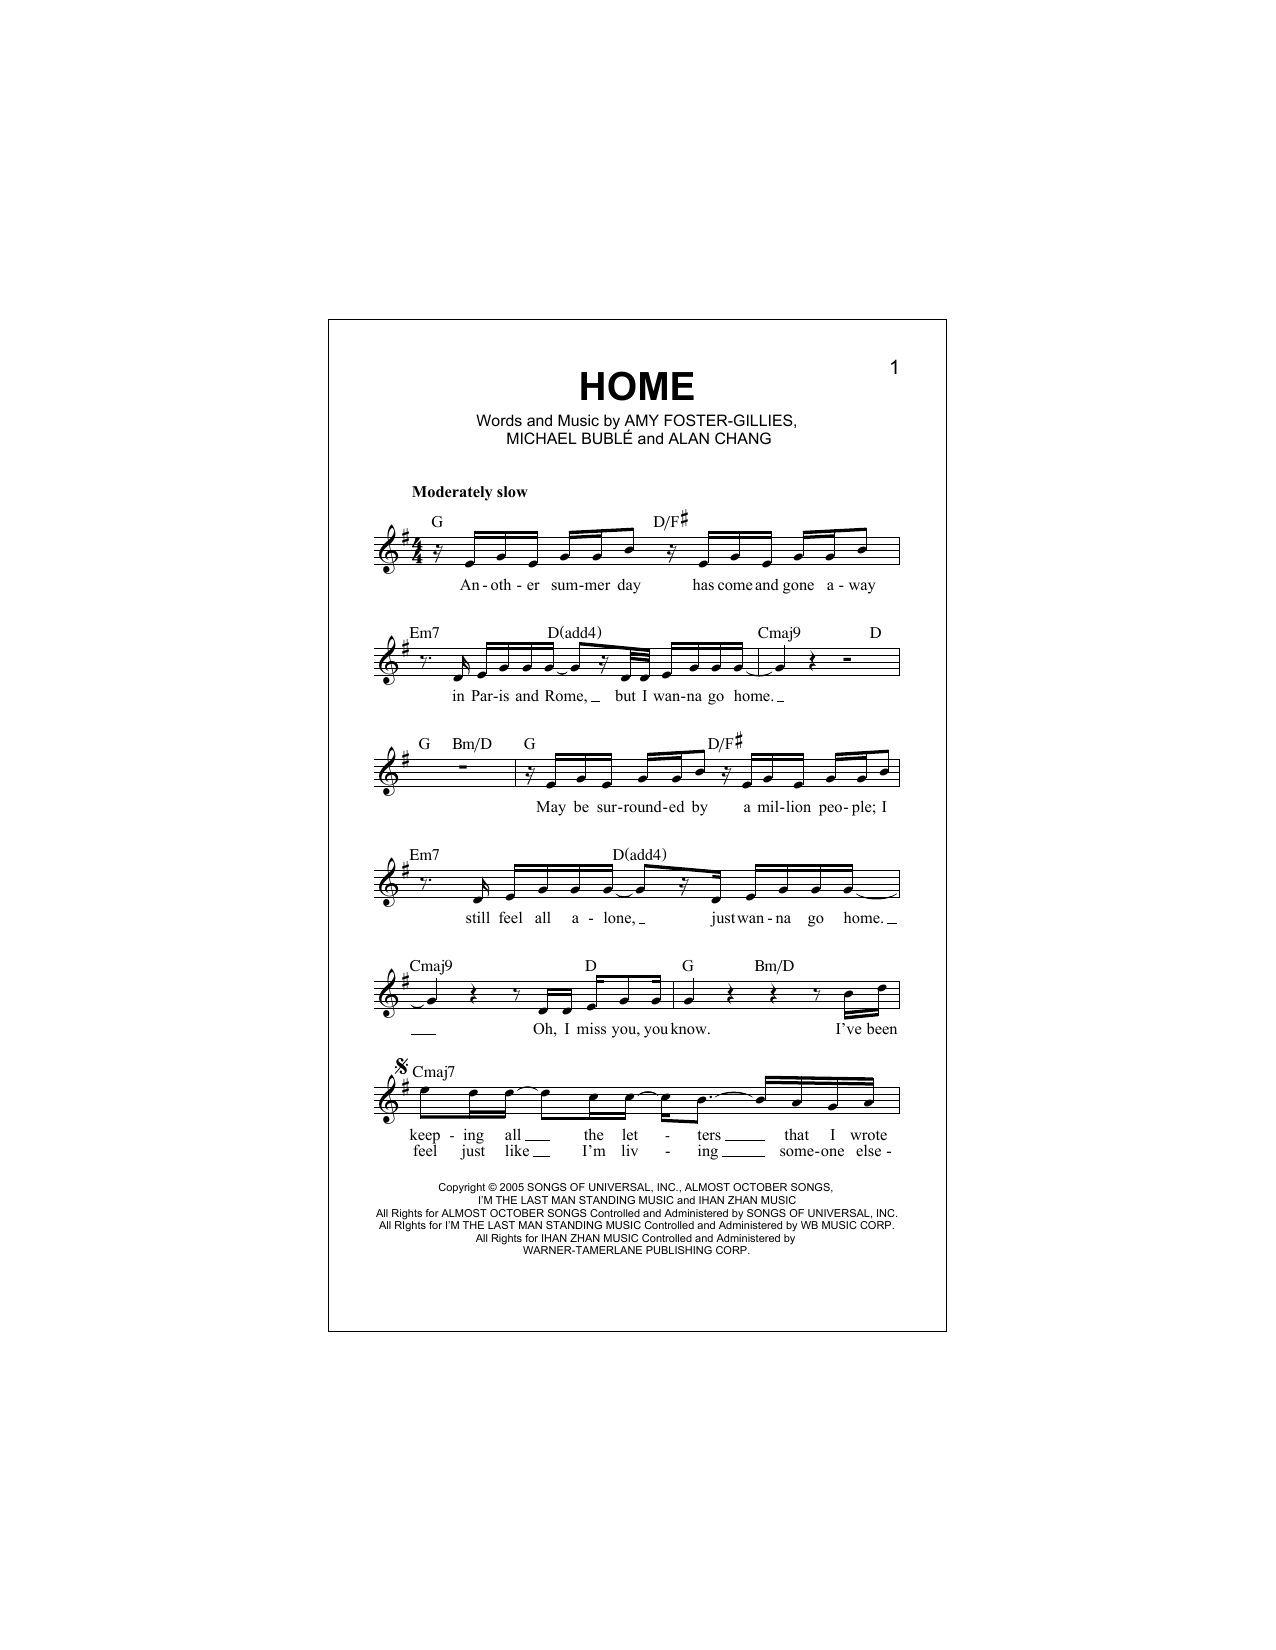 Blake Shelton Home Sheet Music Notes & Chords for Melody Line, Lyrics & Chords - Download or Print PDF